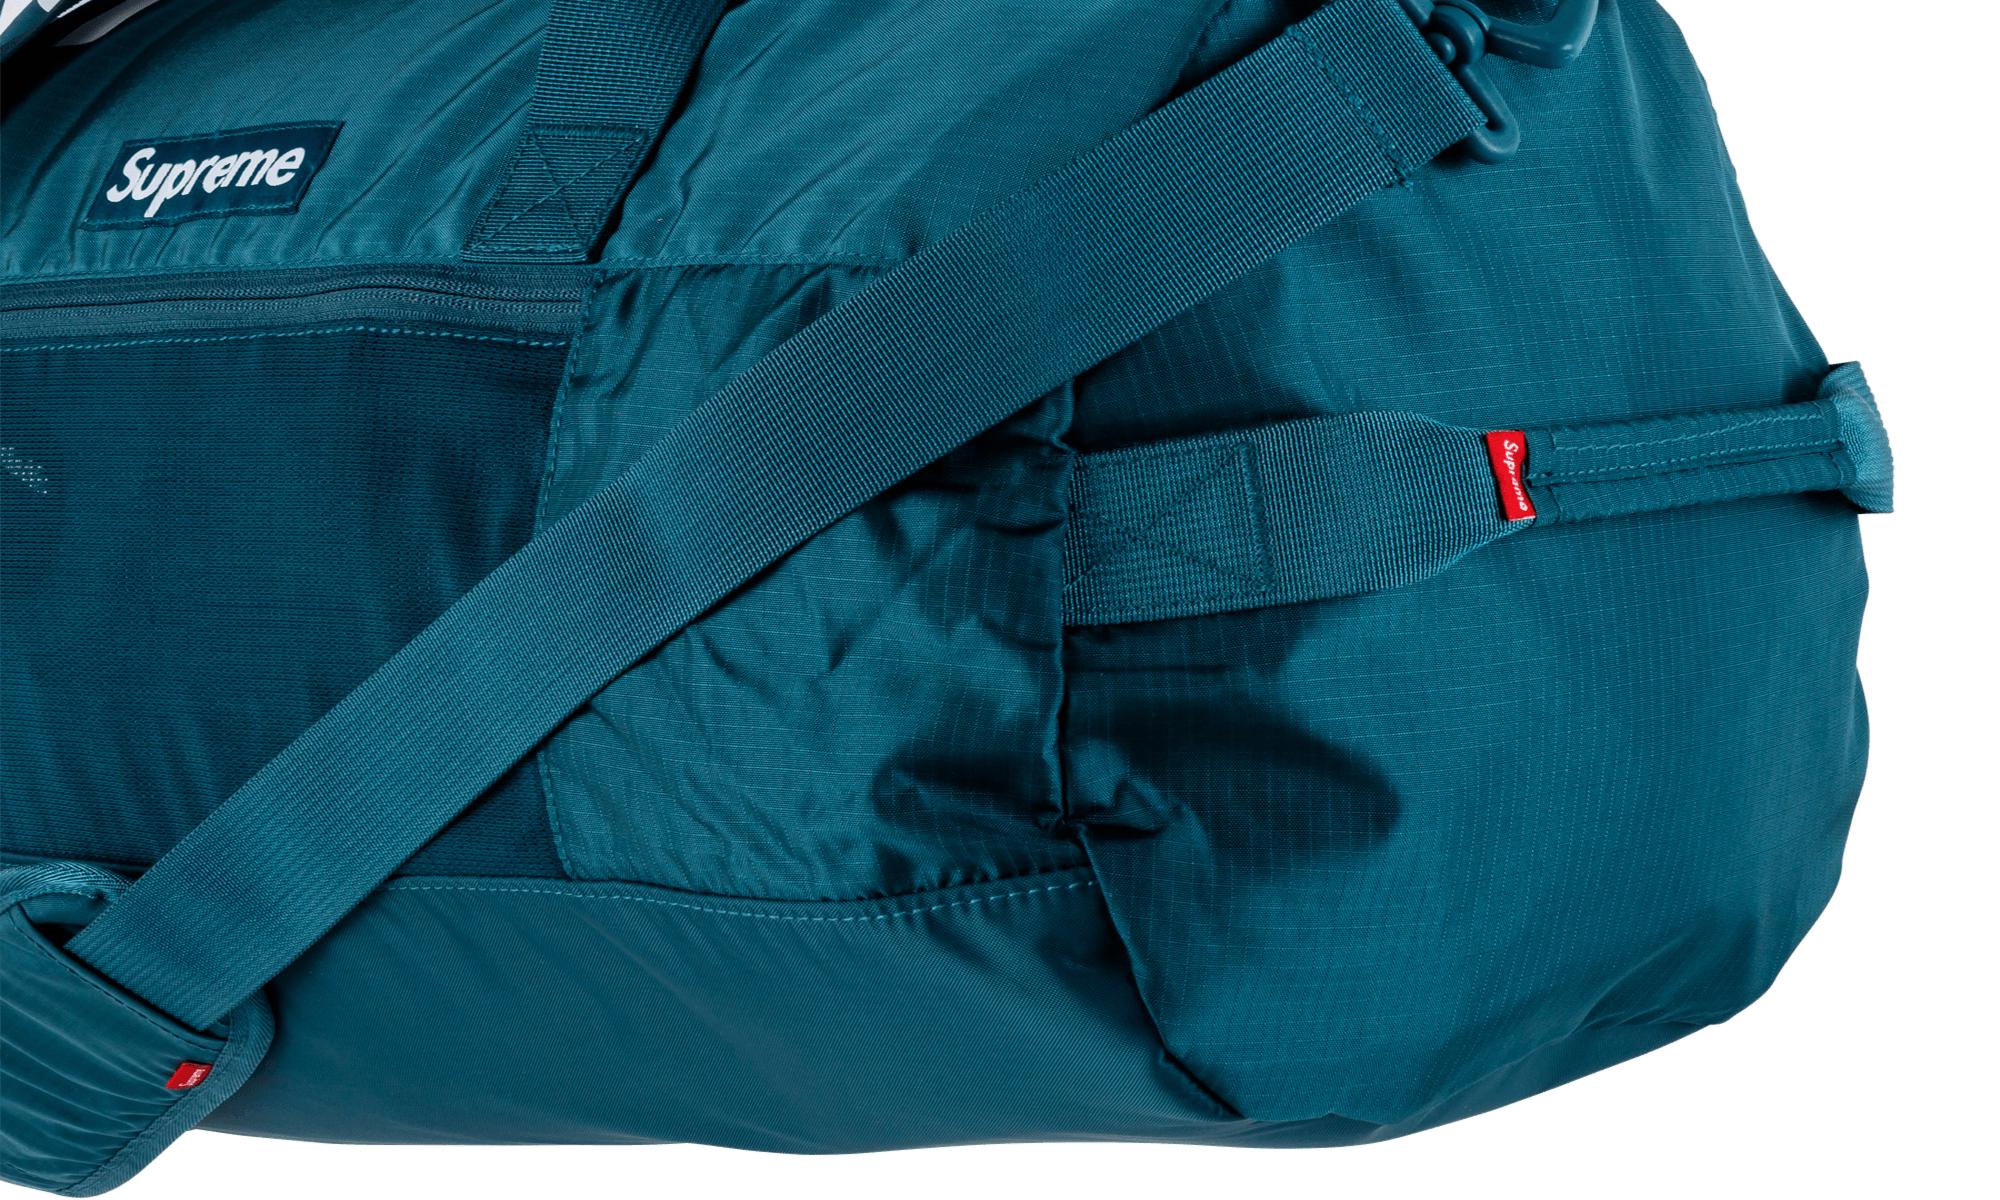 Supreme Duffle Bag in Teal (Blue) for Men - Lyst